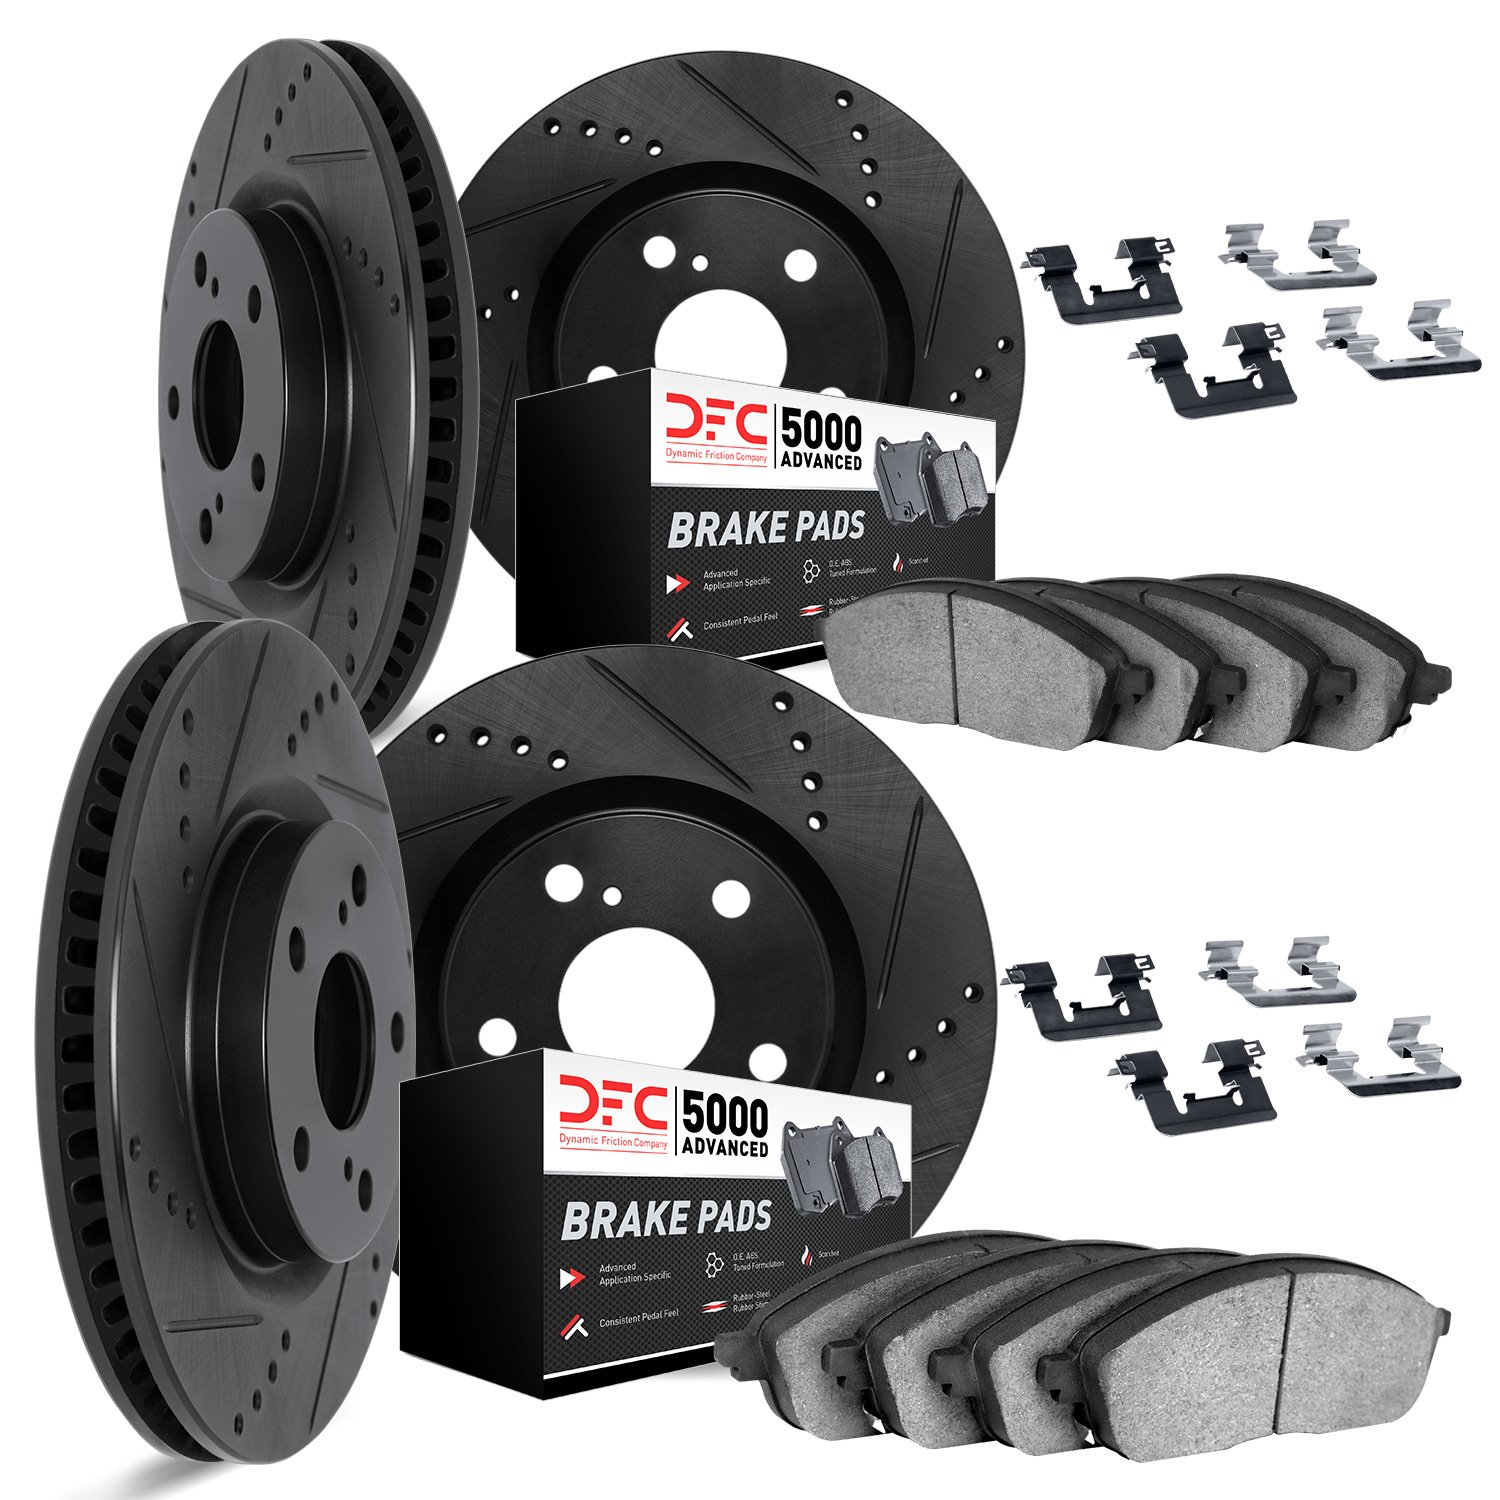 8514-13009 Drilled/Slotted Brake Rotors w/5000 Advanced Brake Pads Kit & Hardware [Black], 2010-2014 Subaru, Position: Front and